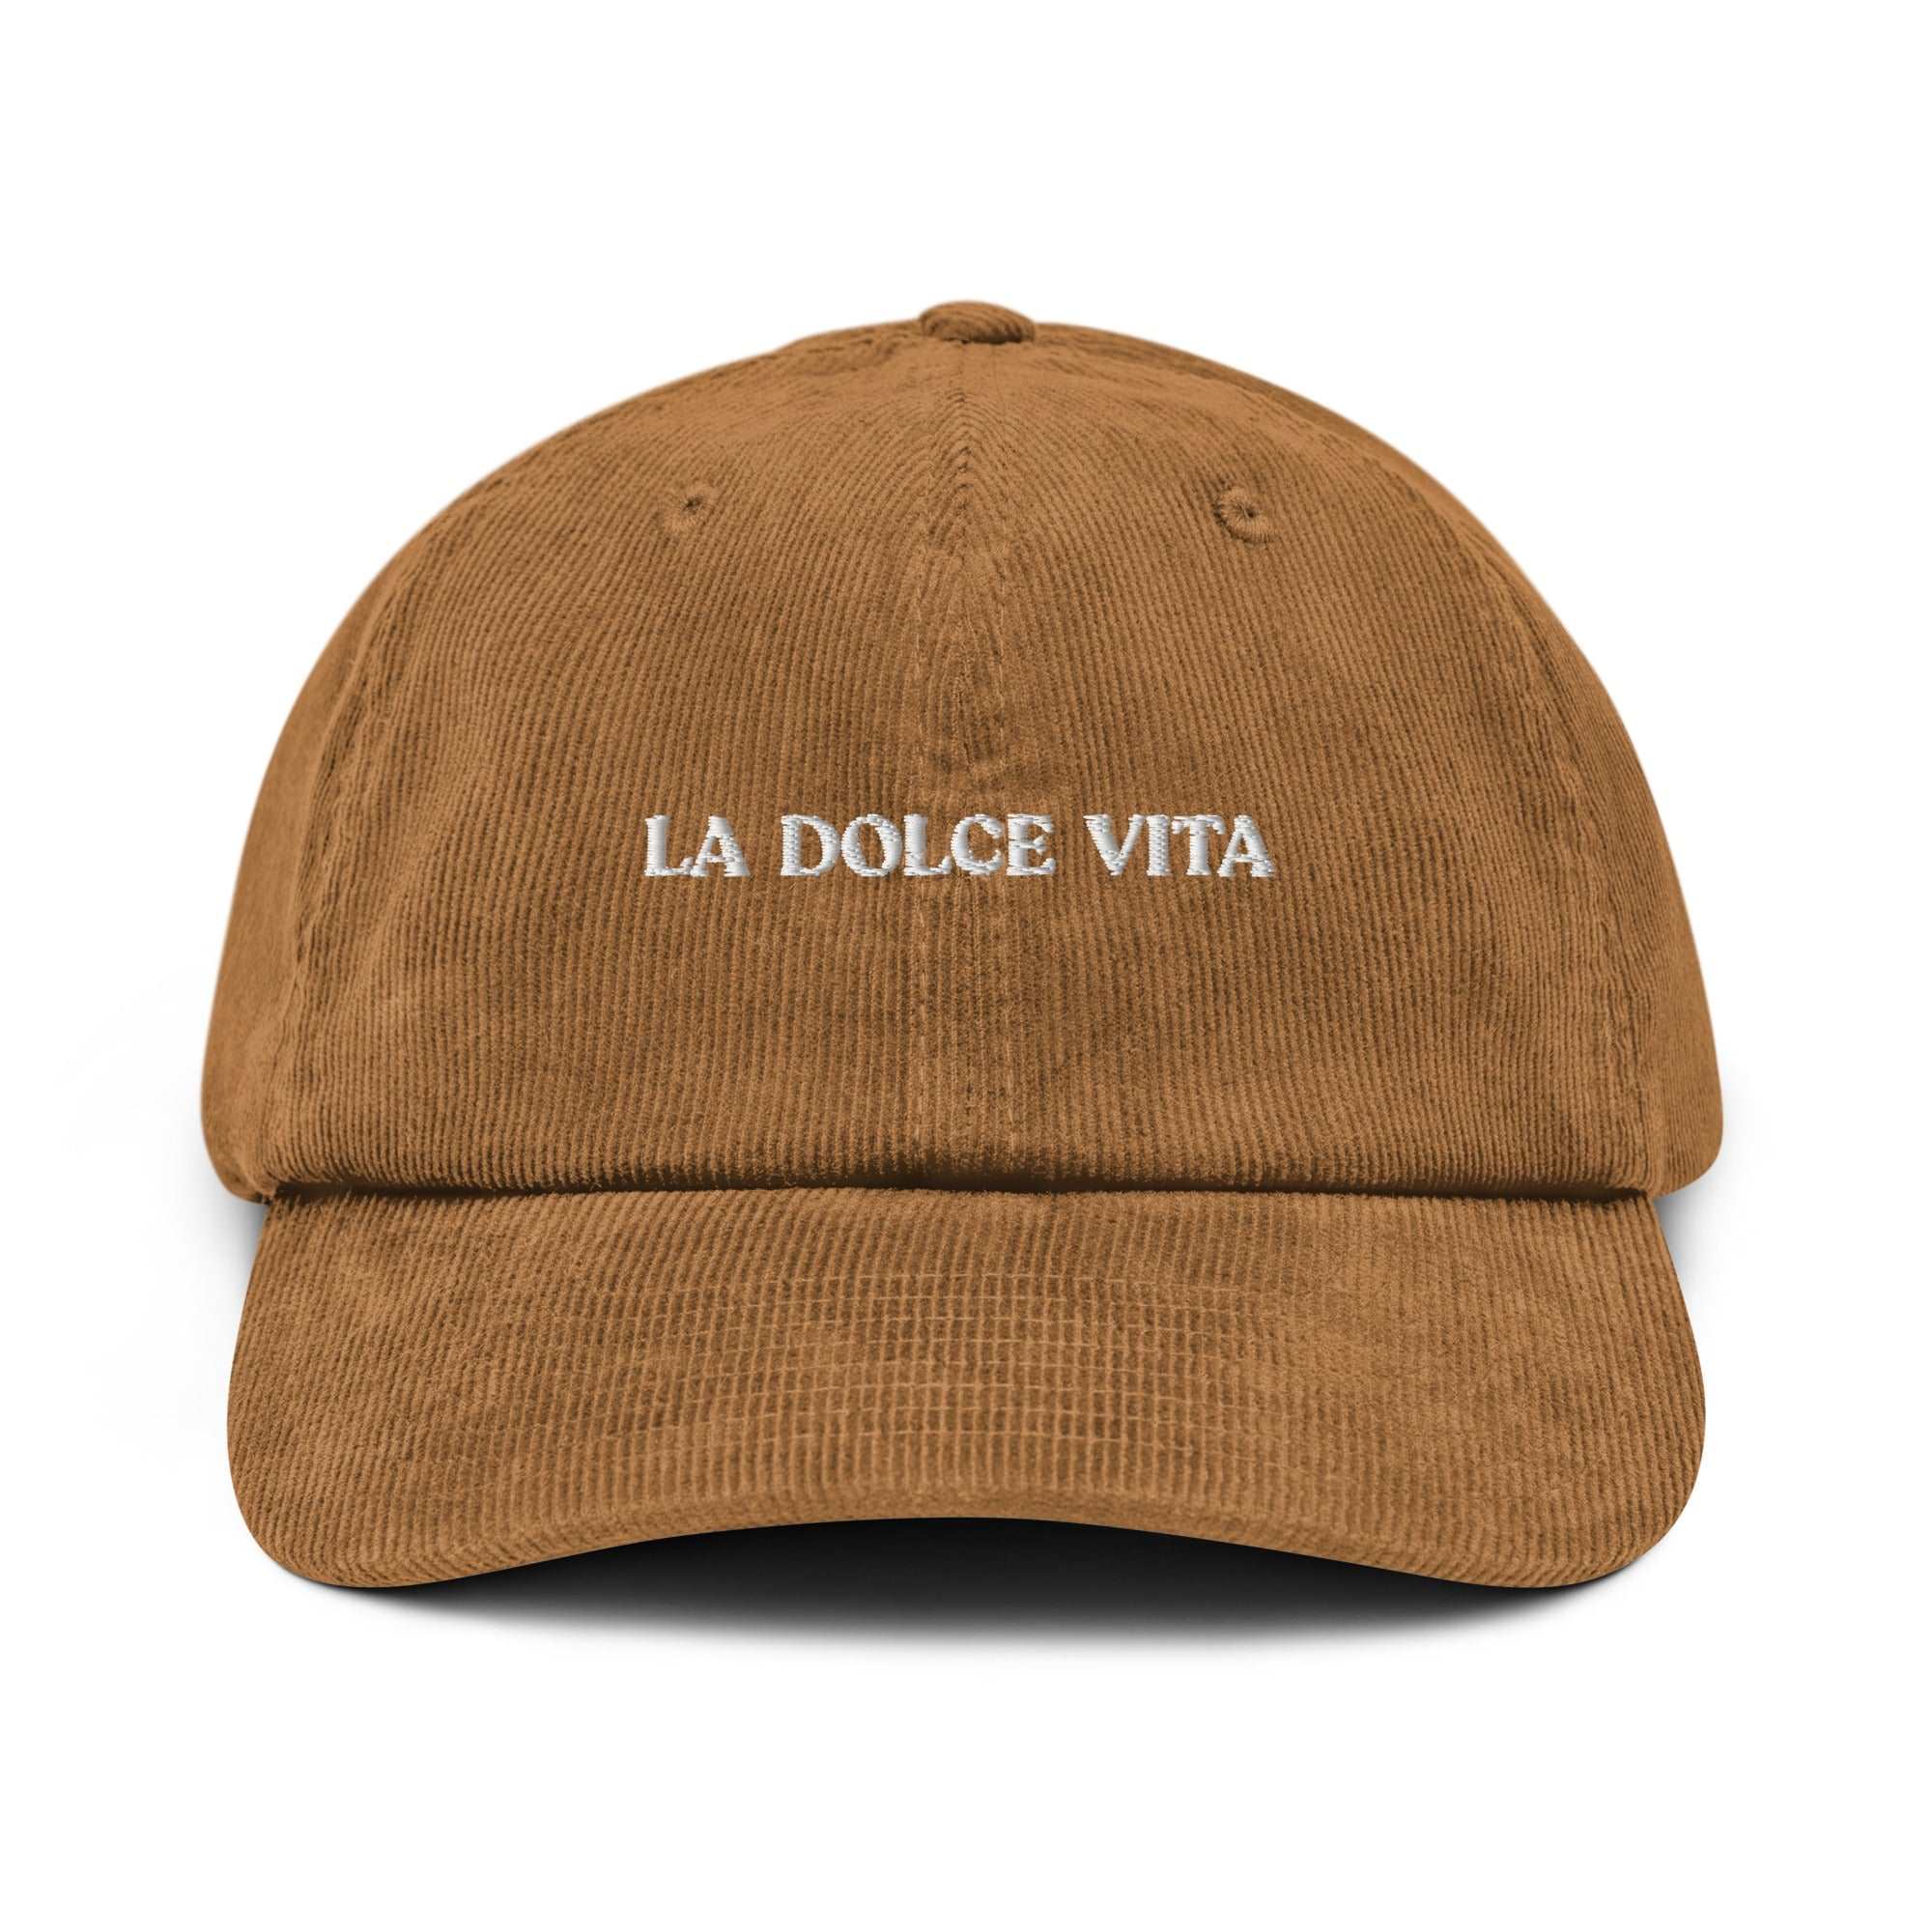 La Dolce Vita - Corduroy Cap - The Refined Spirit